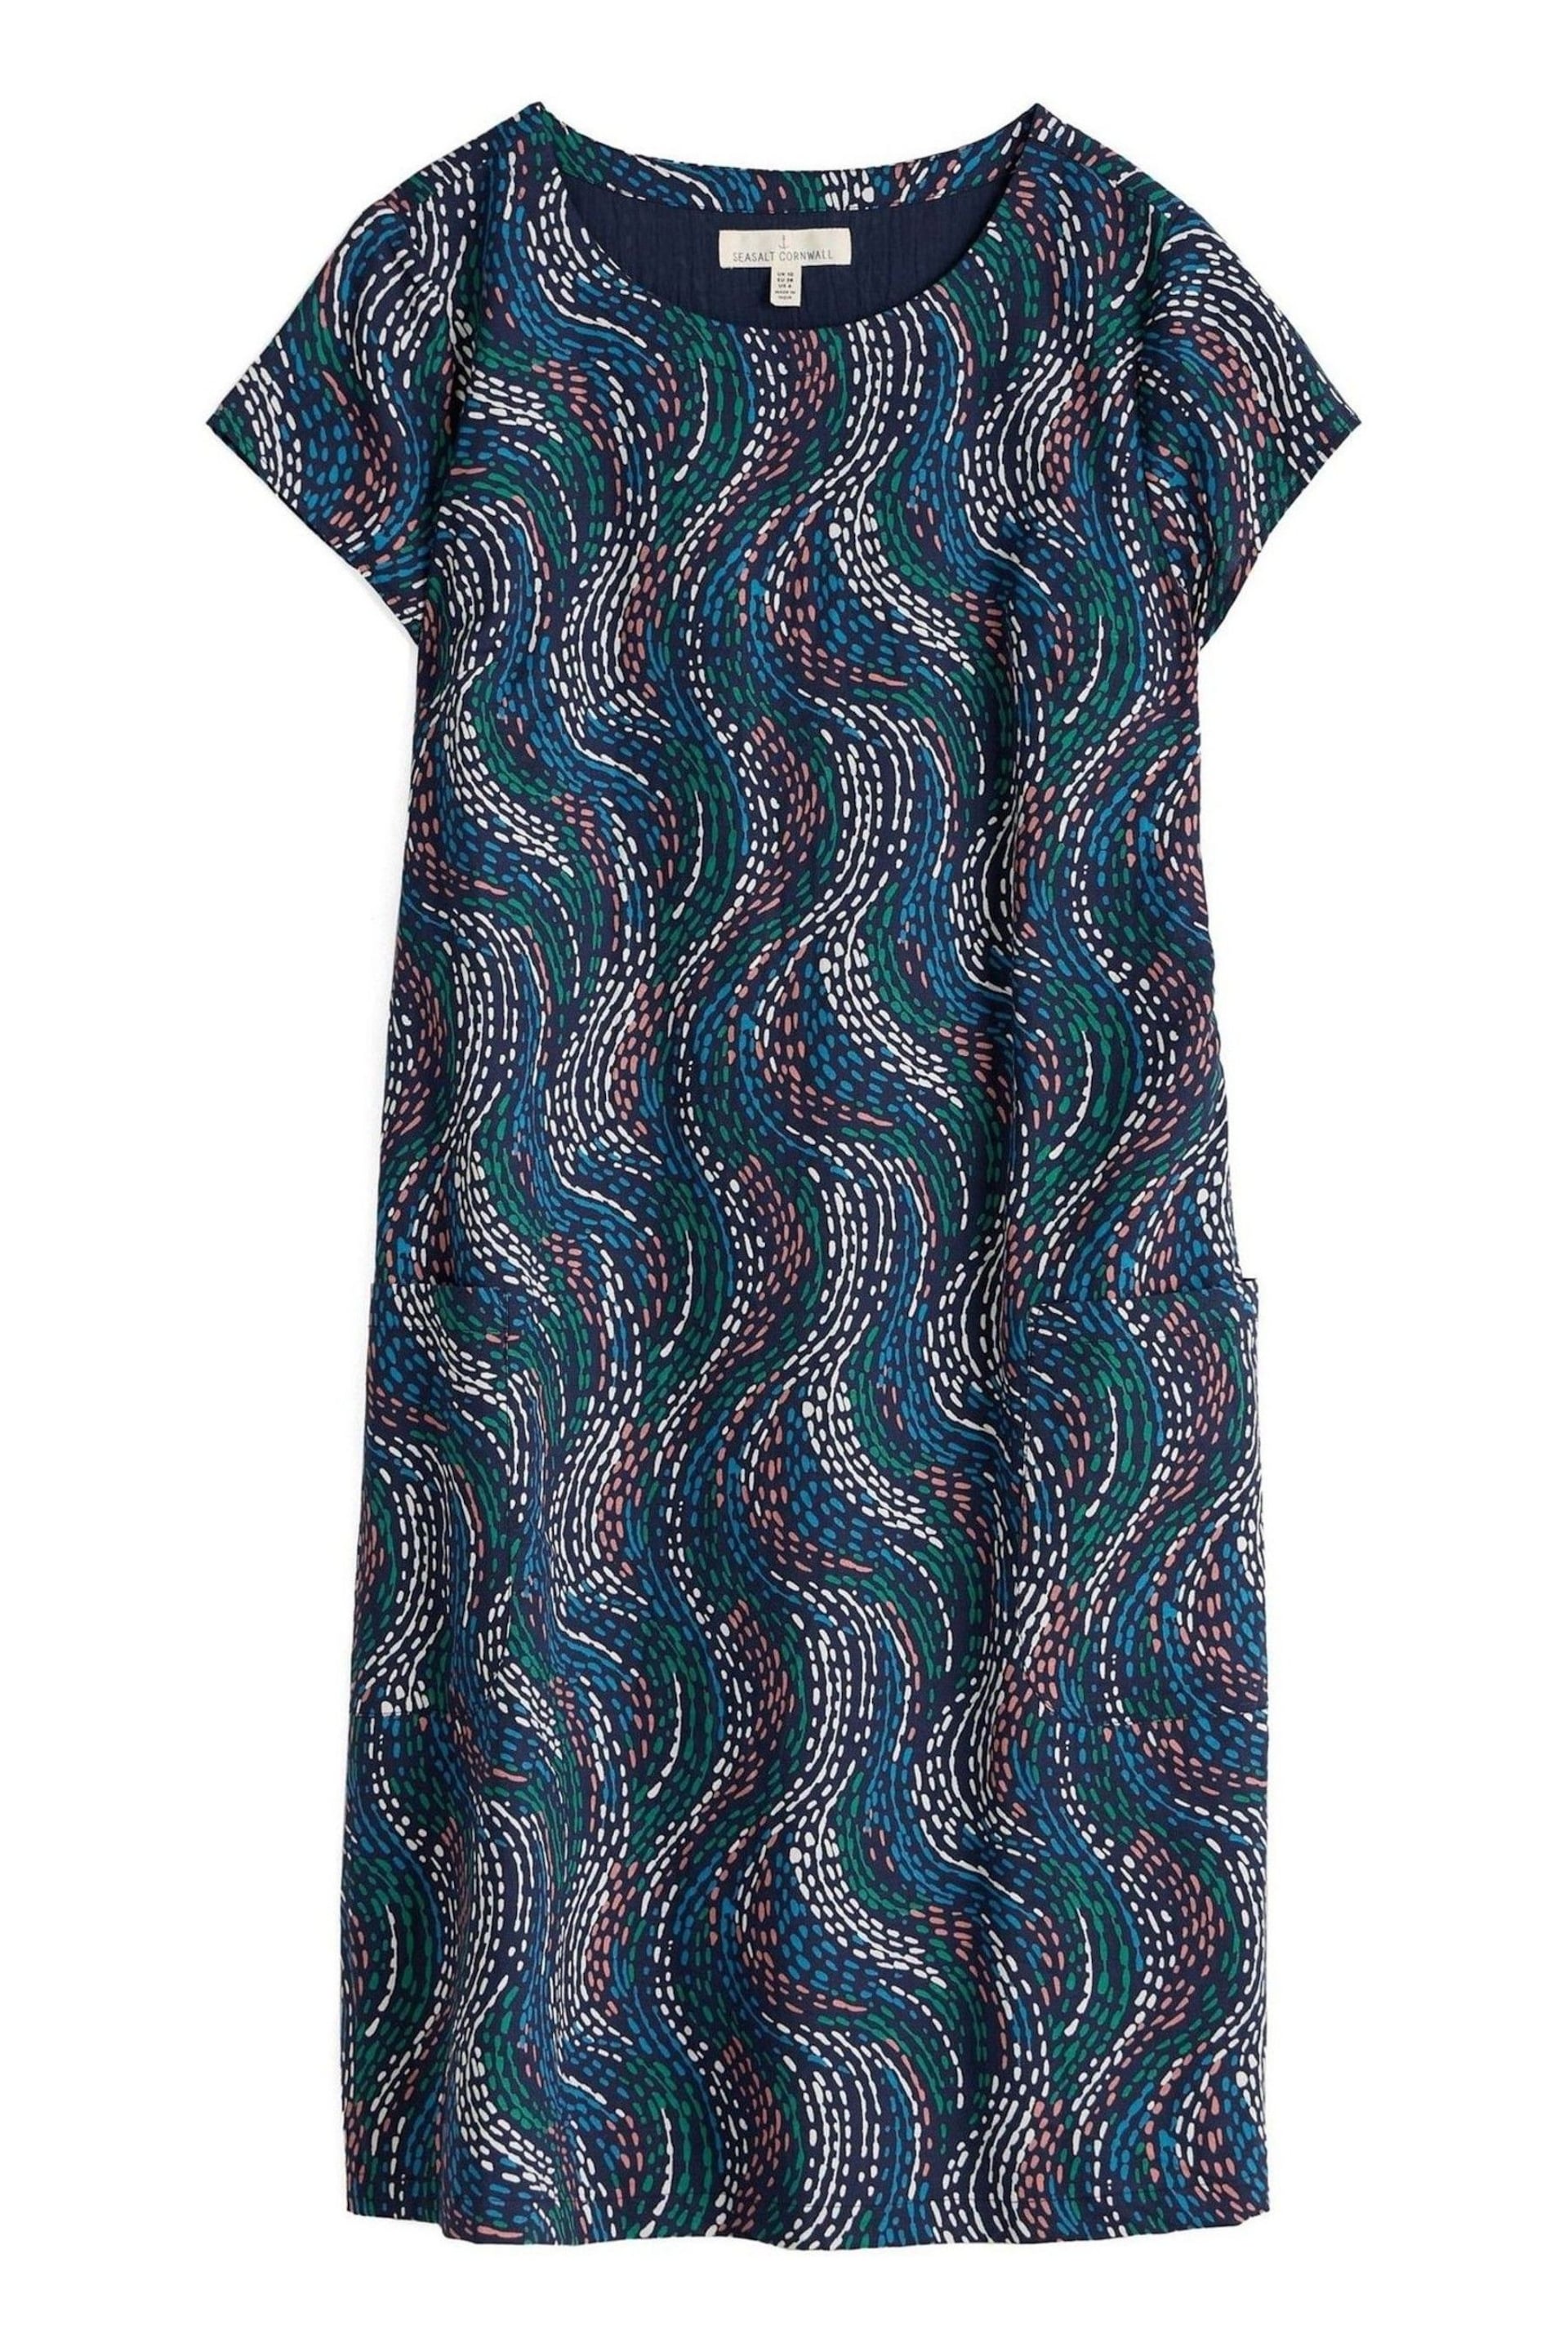 Seasalt Cornwall Blue Petite Tall Line Strokes Short Sleeve Dress - Image 4 of 4